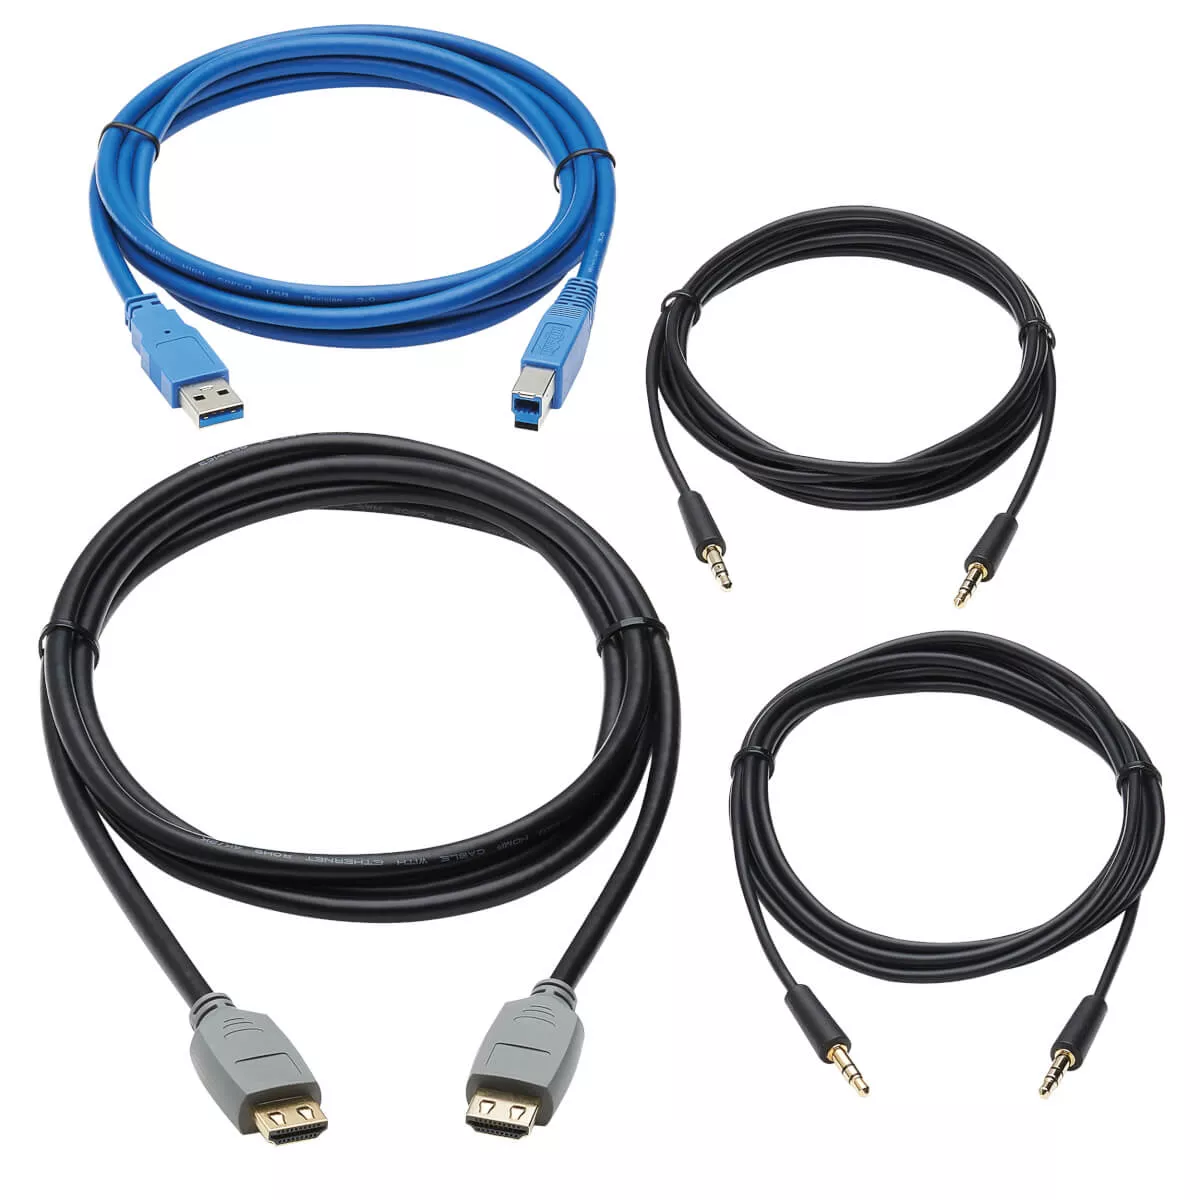 Revendeur officiel EATON TRIPPLITE HDMI KVM Cable Kit for Tripp Lite B005